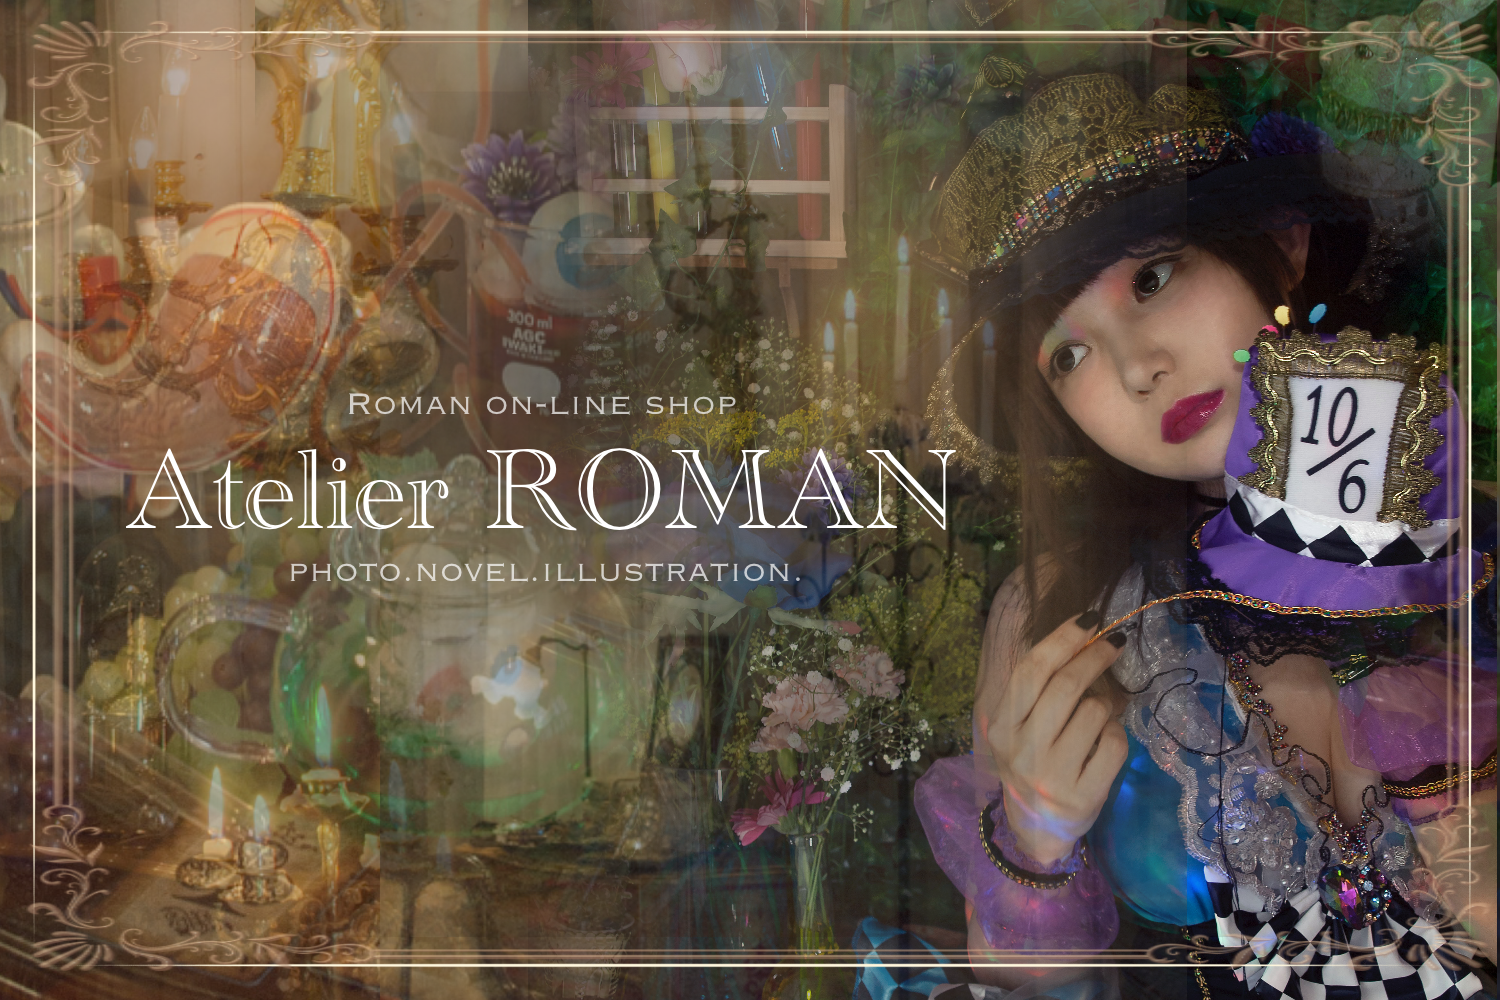 ROMAN online shop「Atelier ROMAN.」(アトリエロマン)